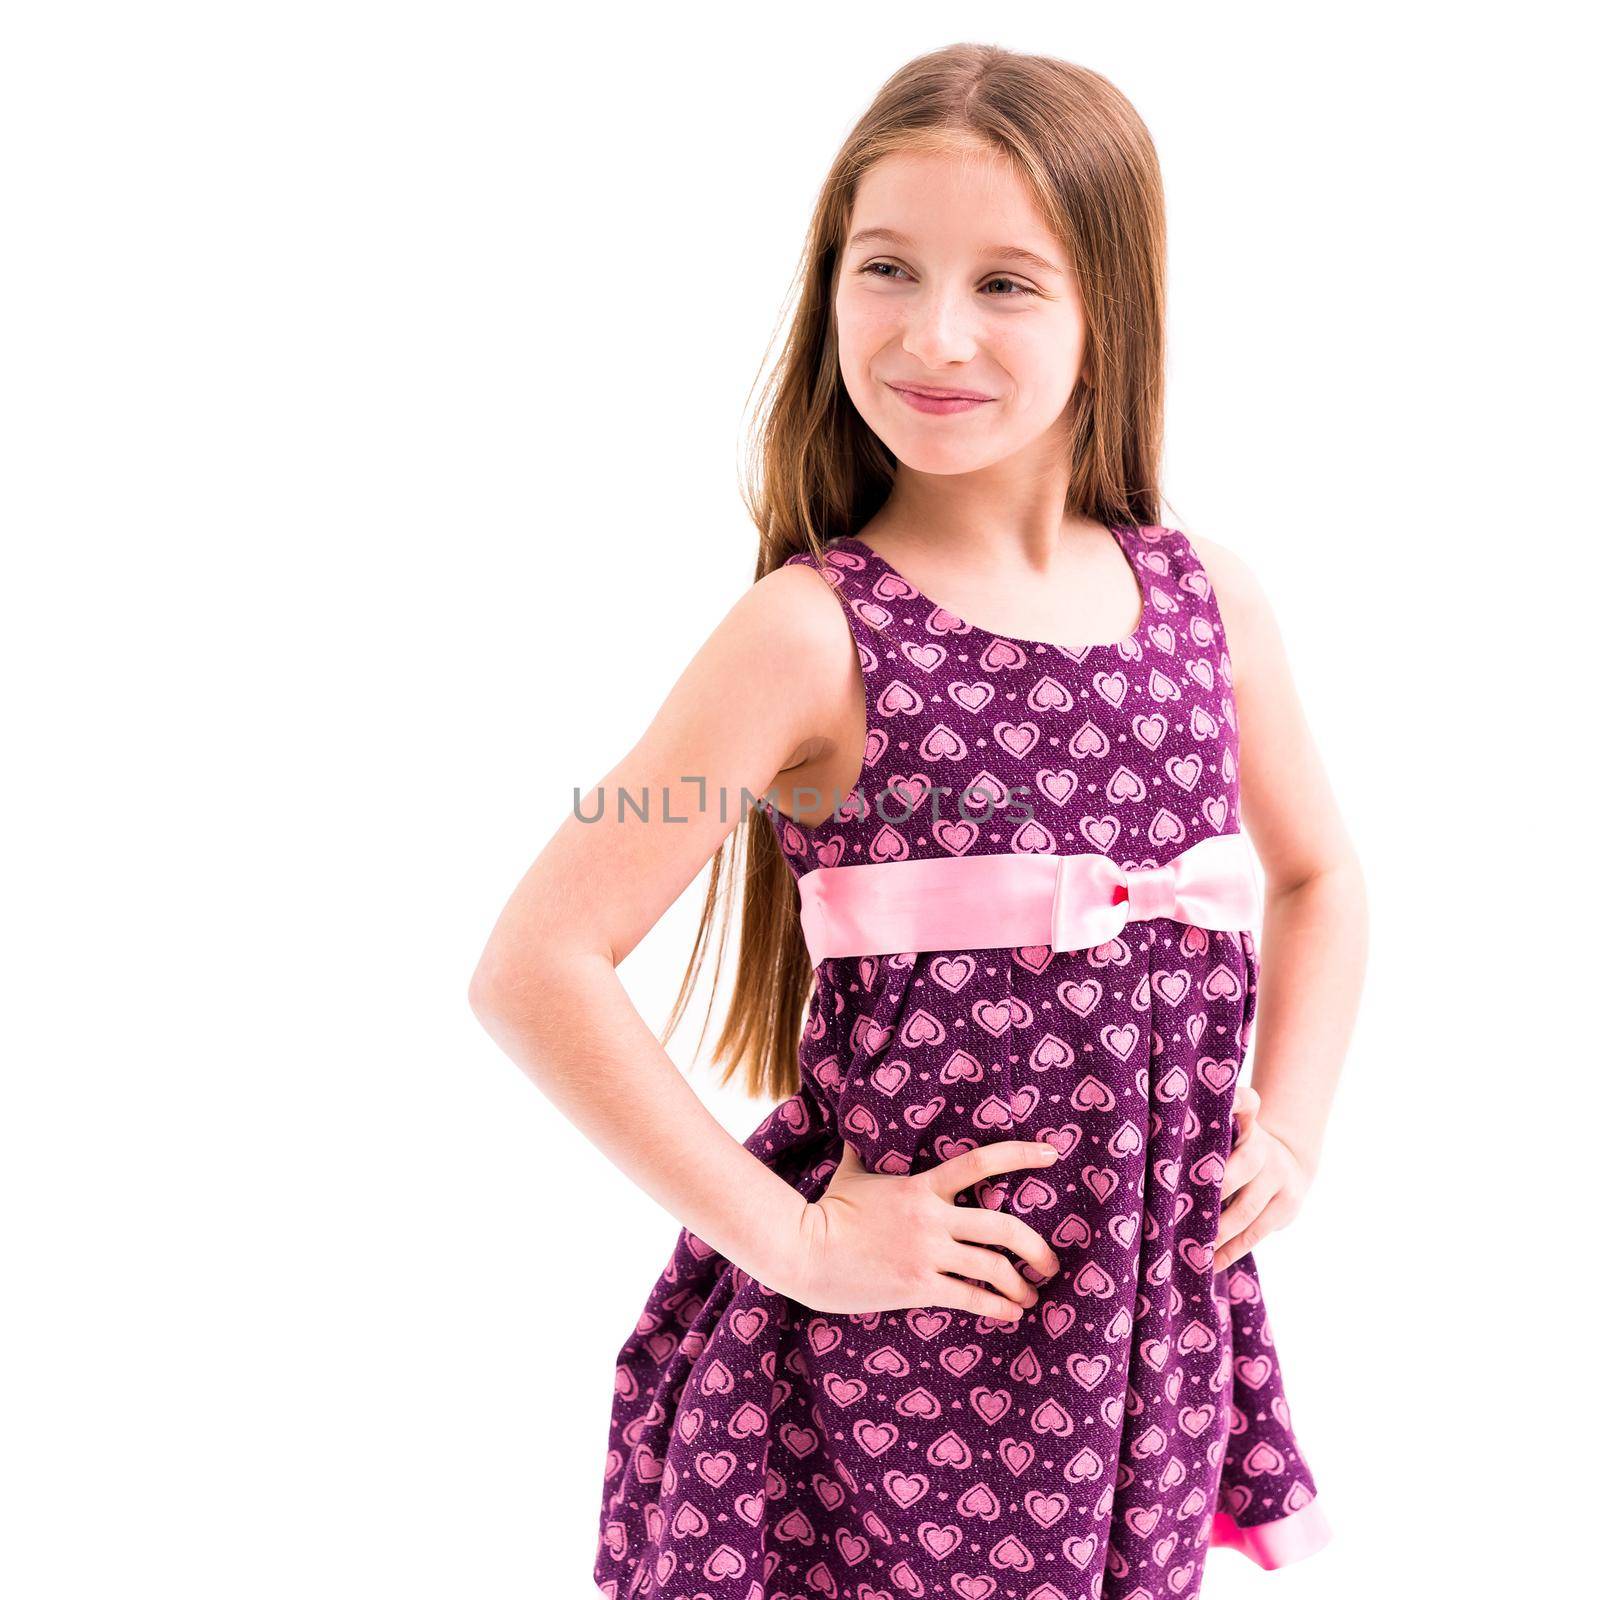 girl with long hair wearing a violet dress by GekaSkr